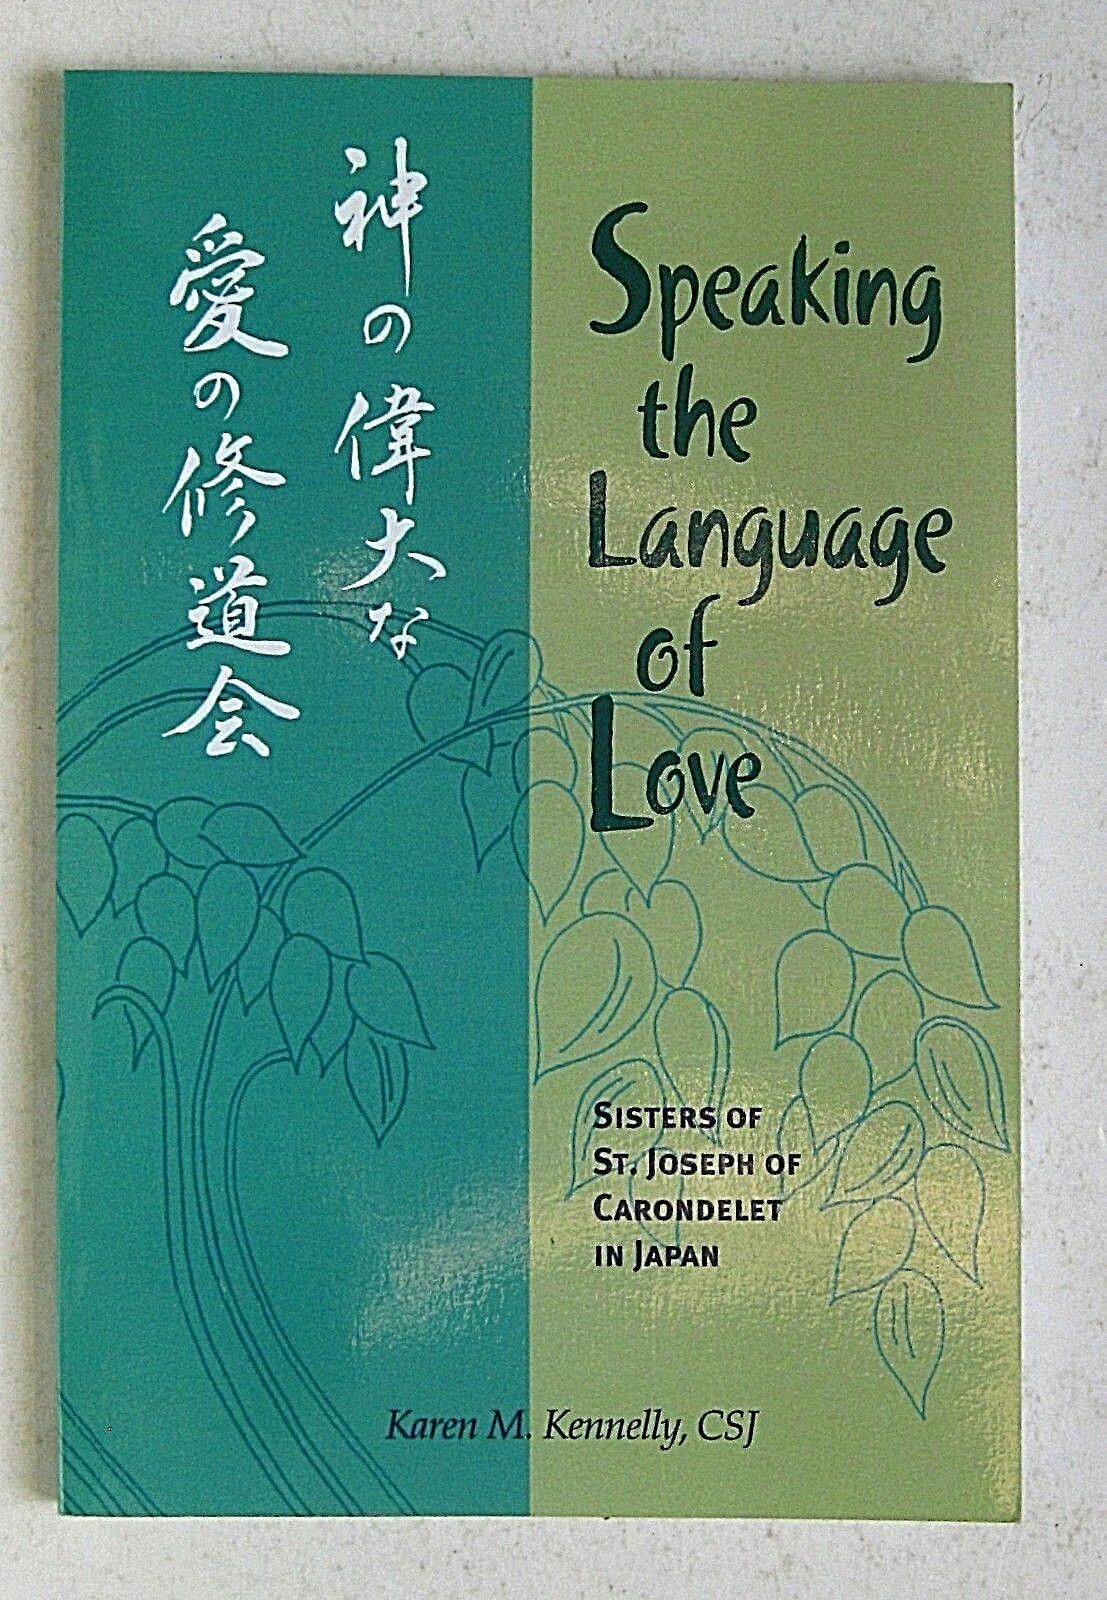 St Louis Sisters of St Joseph Carondelet in Japan Speaking the Language of Love